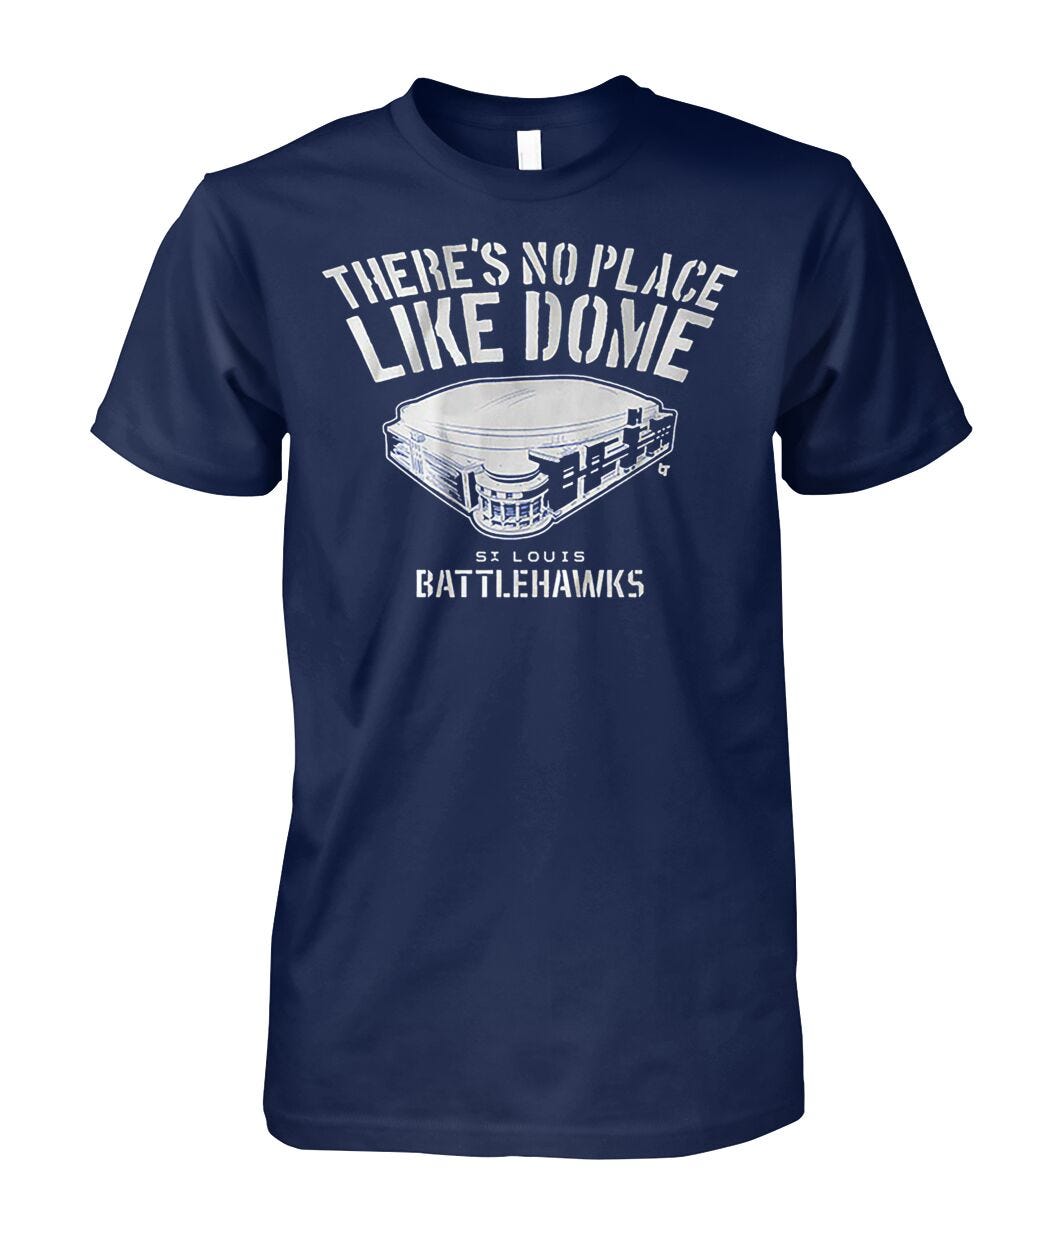 St. Louis Battlehawks There's No Place Like Dome Shirt | Medium